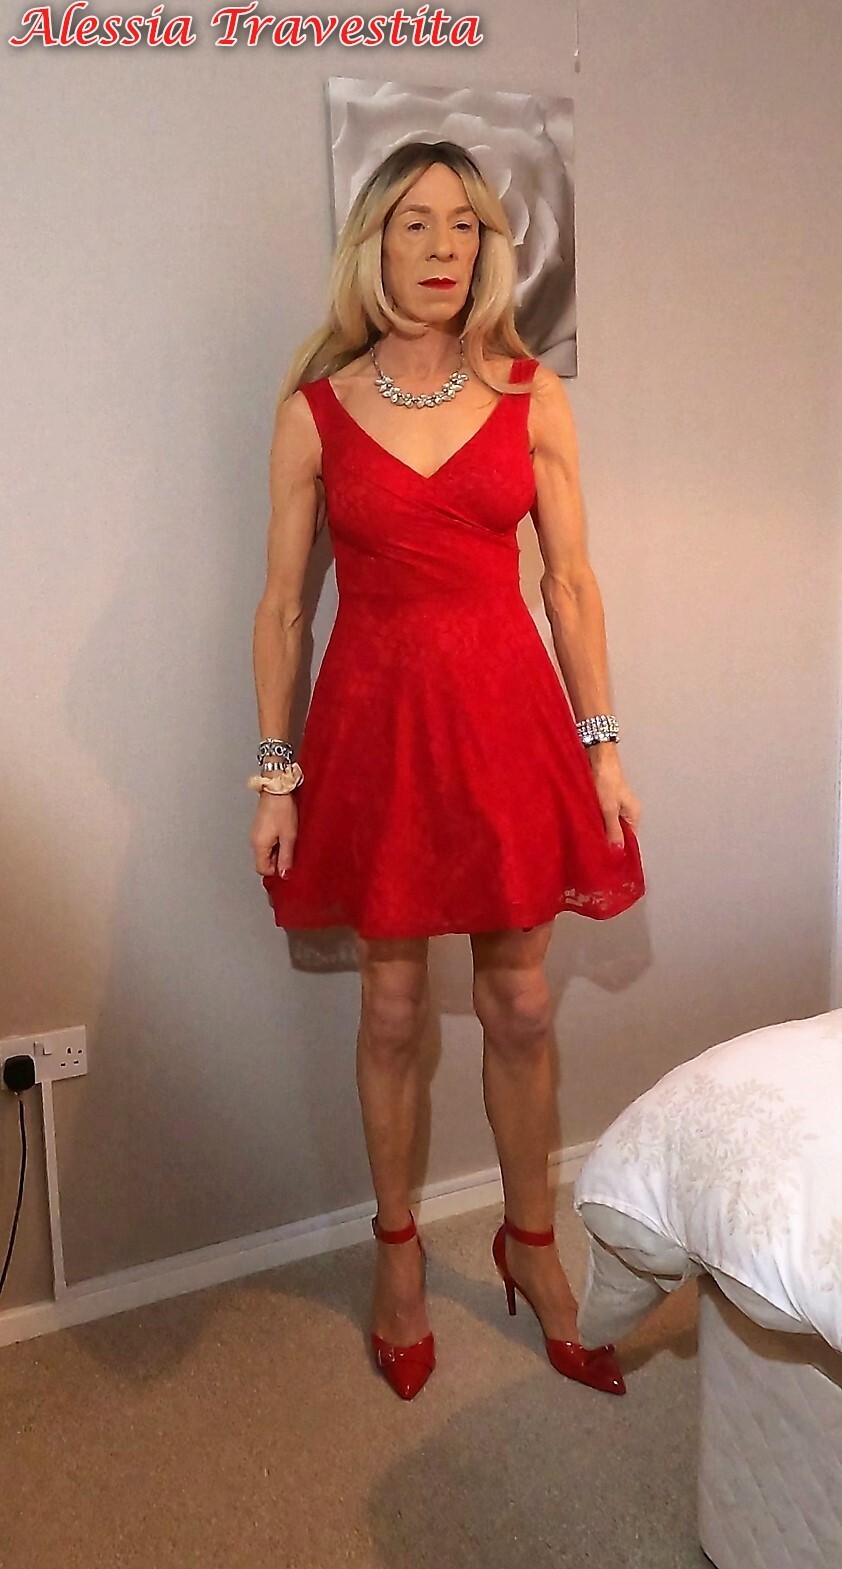 65 Alessia Travestita In Flirty Red Dress Photo 6